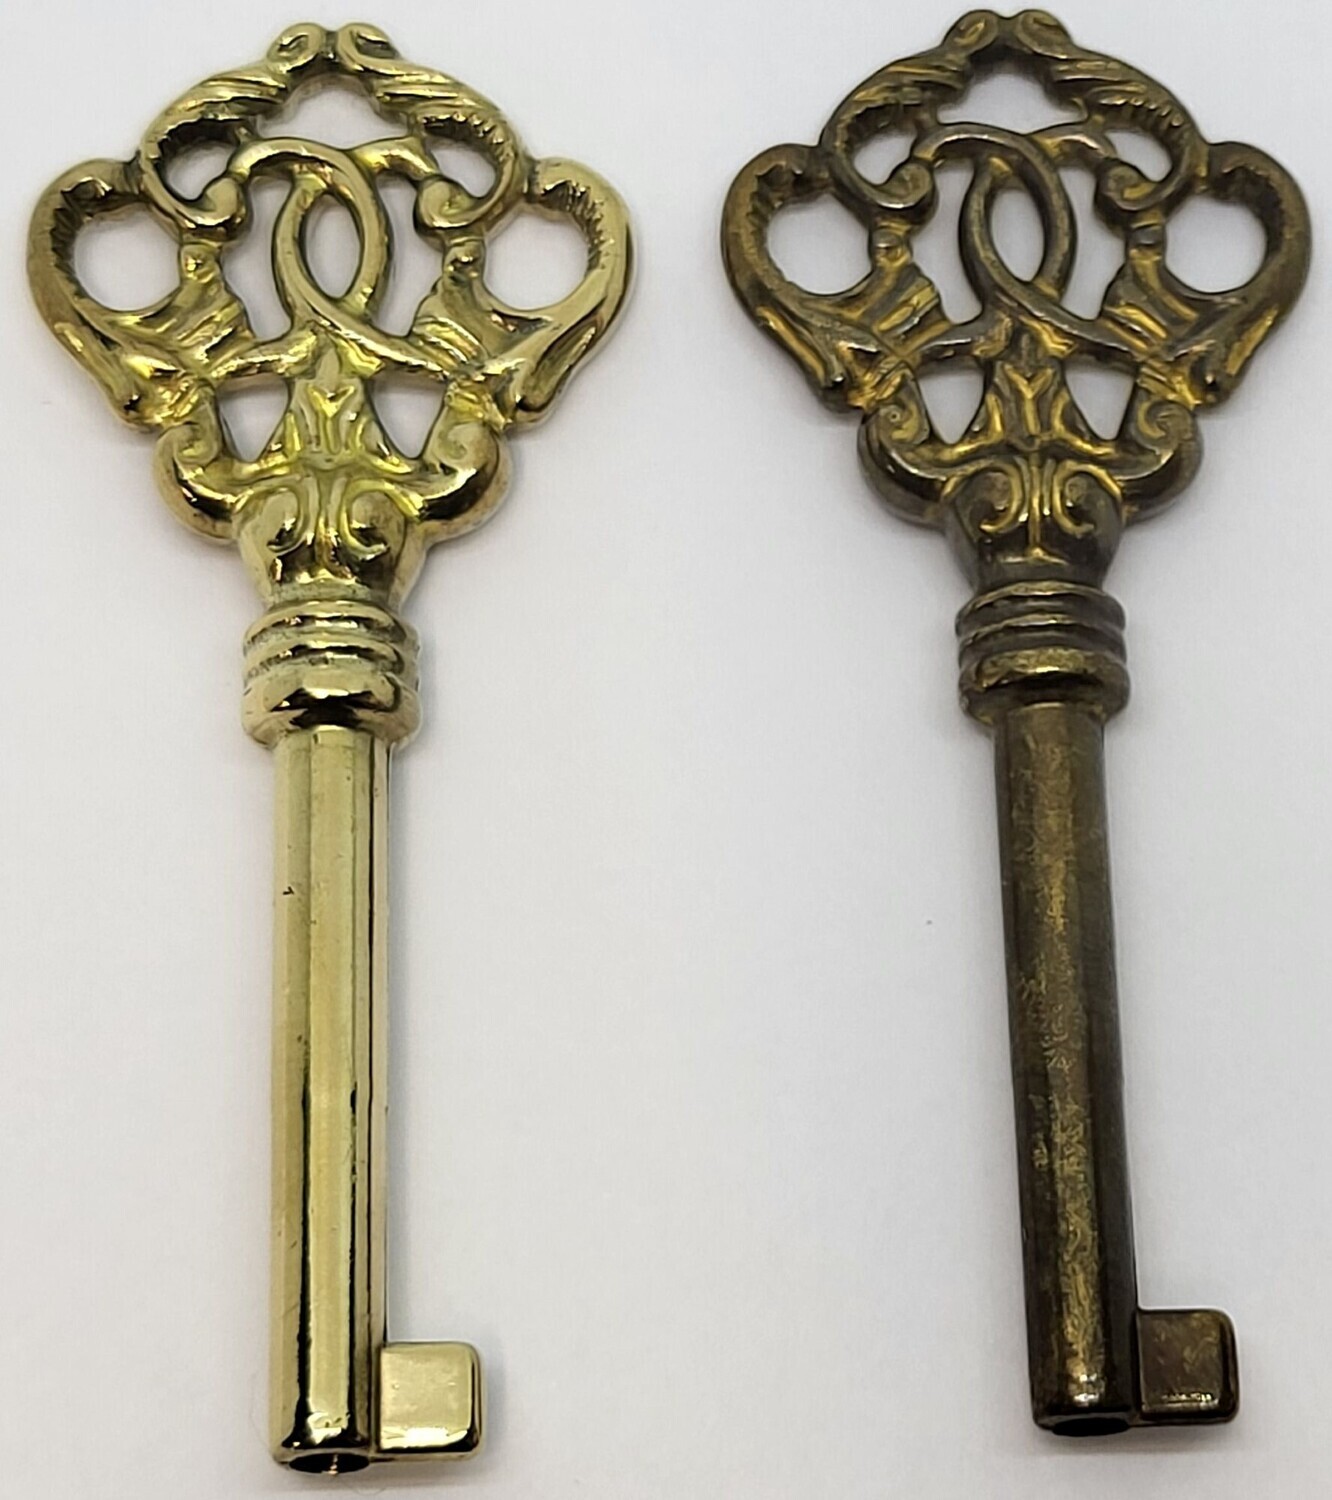 Ornate Cast Brass Key Polished Skeleton Antique vintage retro old fancy decorative gold decorative